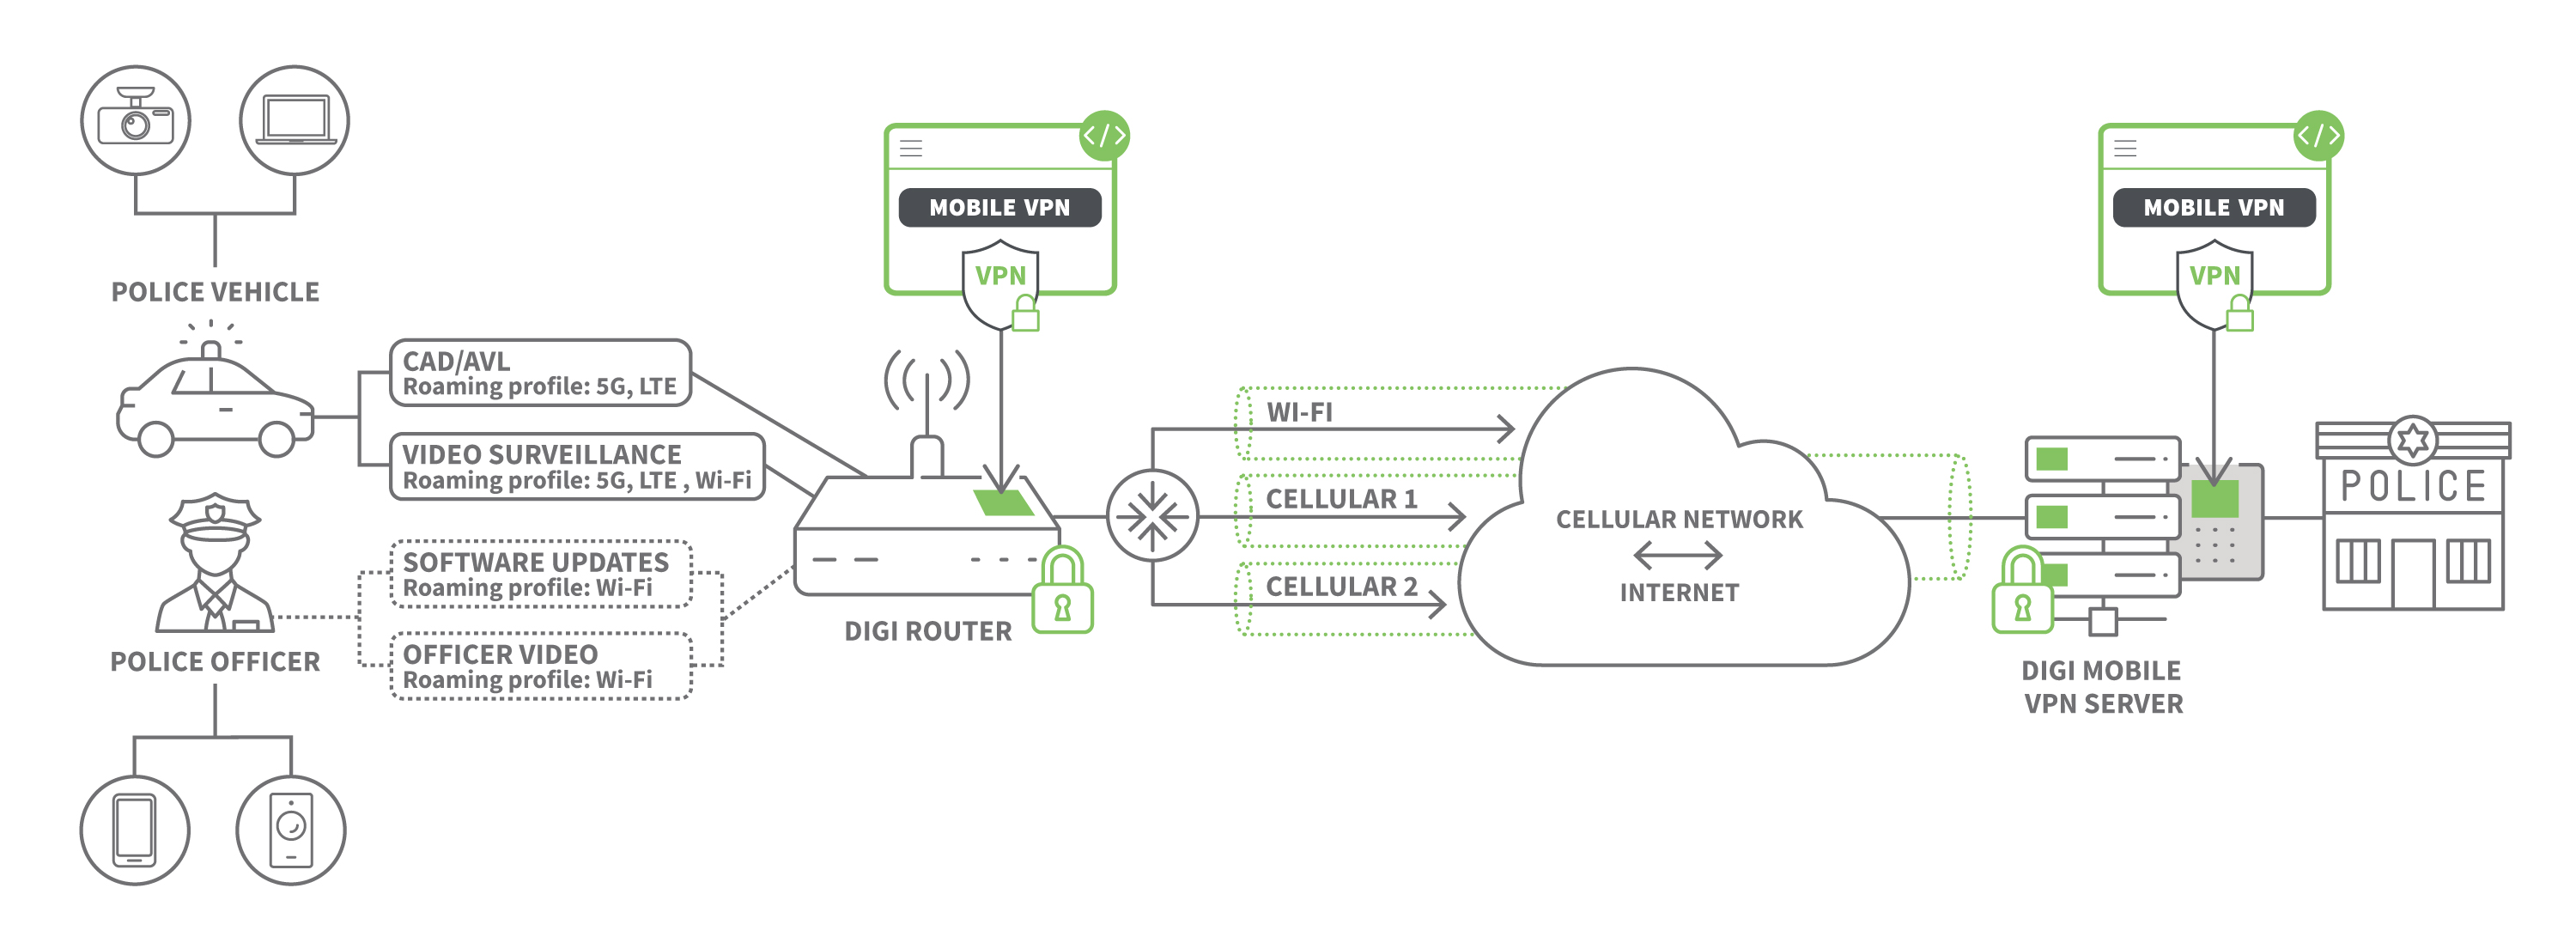 Diagramme Digi Mobile VPN